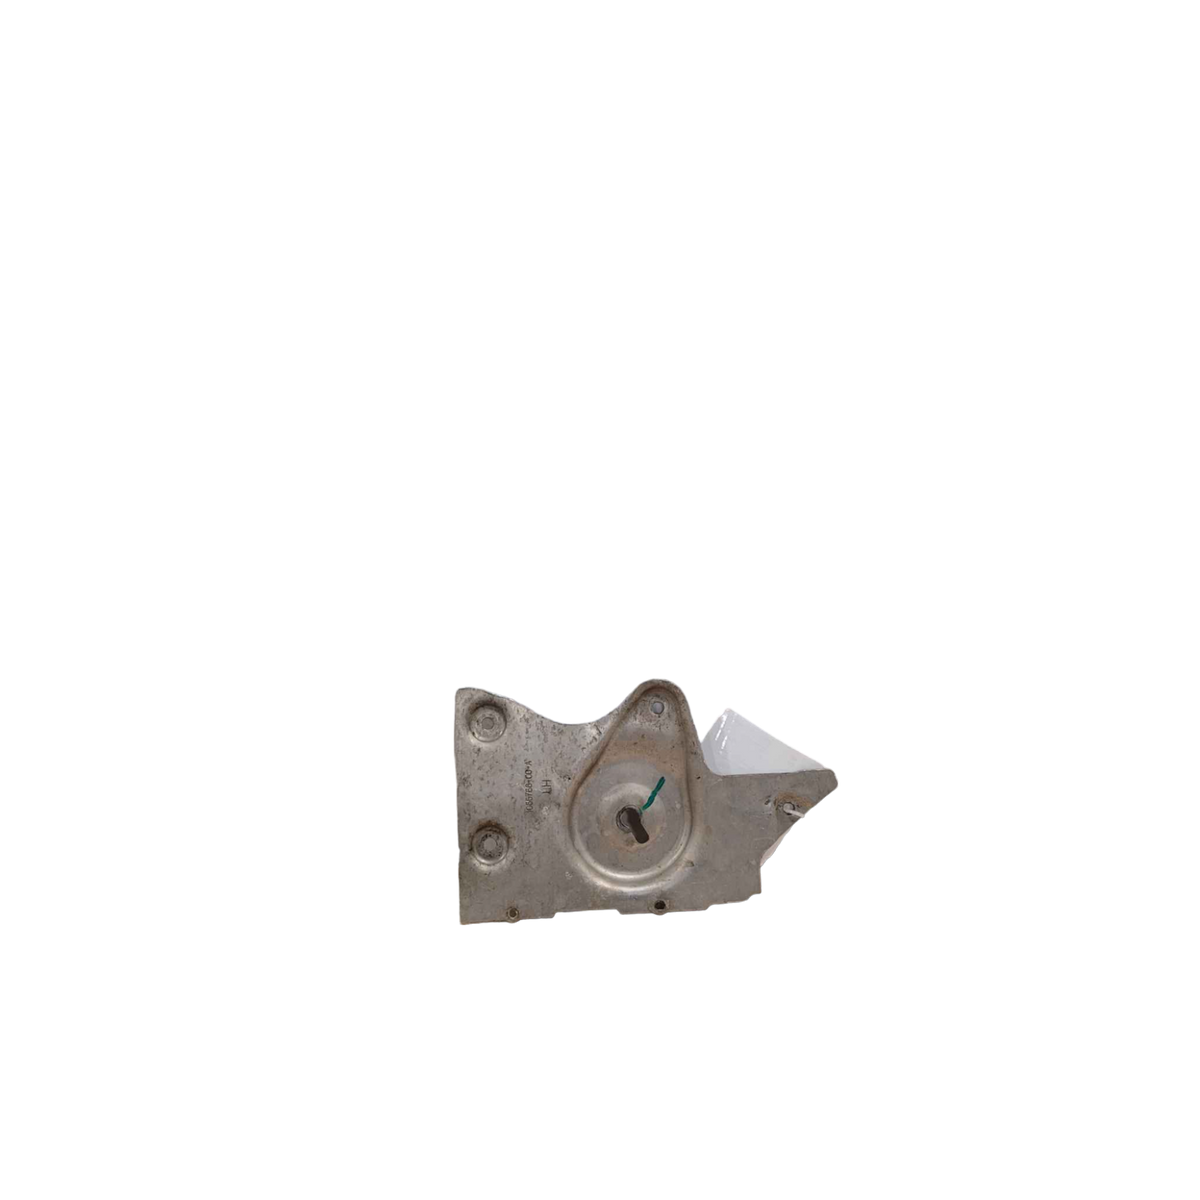 TESLA MODEL S REAR SUBFRAME SHEAR PLATE - LEFT 1055766-00-A